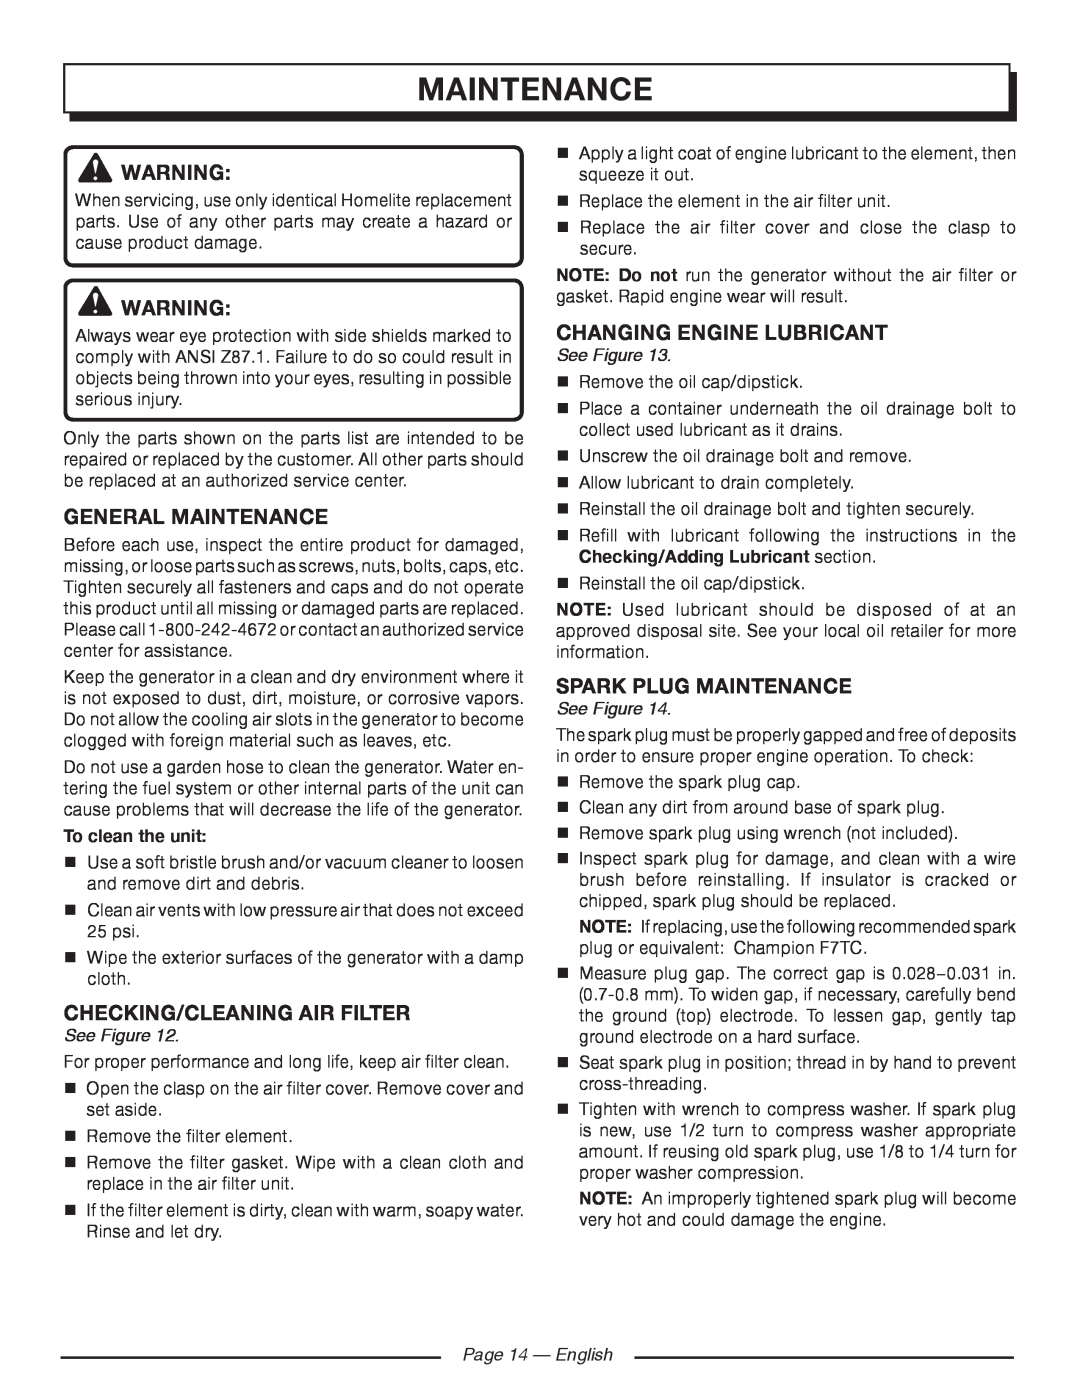 Homelite HG5000 manuel dutilisation maintenance, See Figure, Page 14 — English 